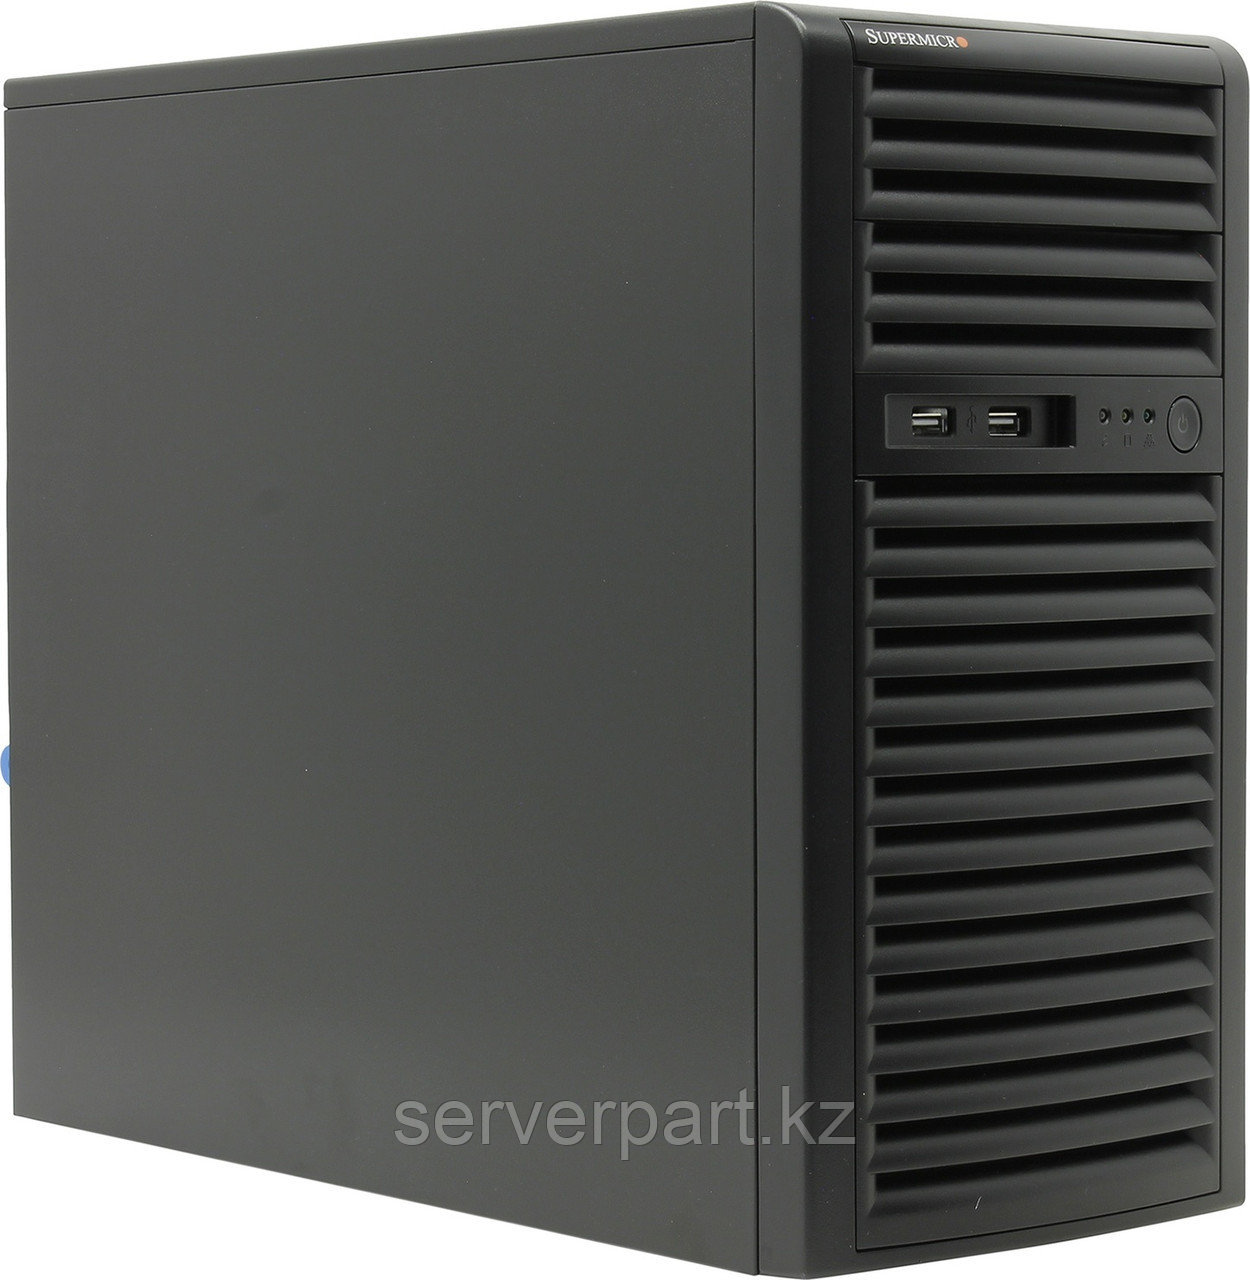 Сервер Supermicro SYS-5039C (Tower 4LFF)/4-core intel xeon E2224 (3.4GHz)/16GB EUDIMM